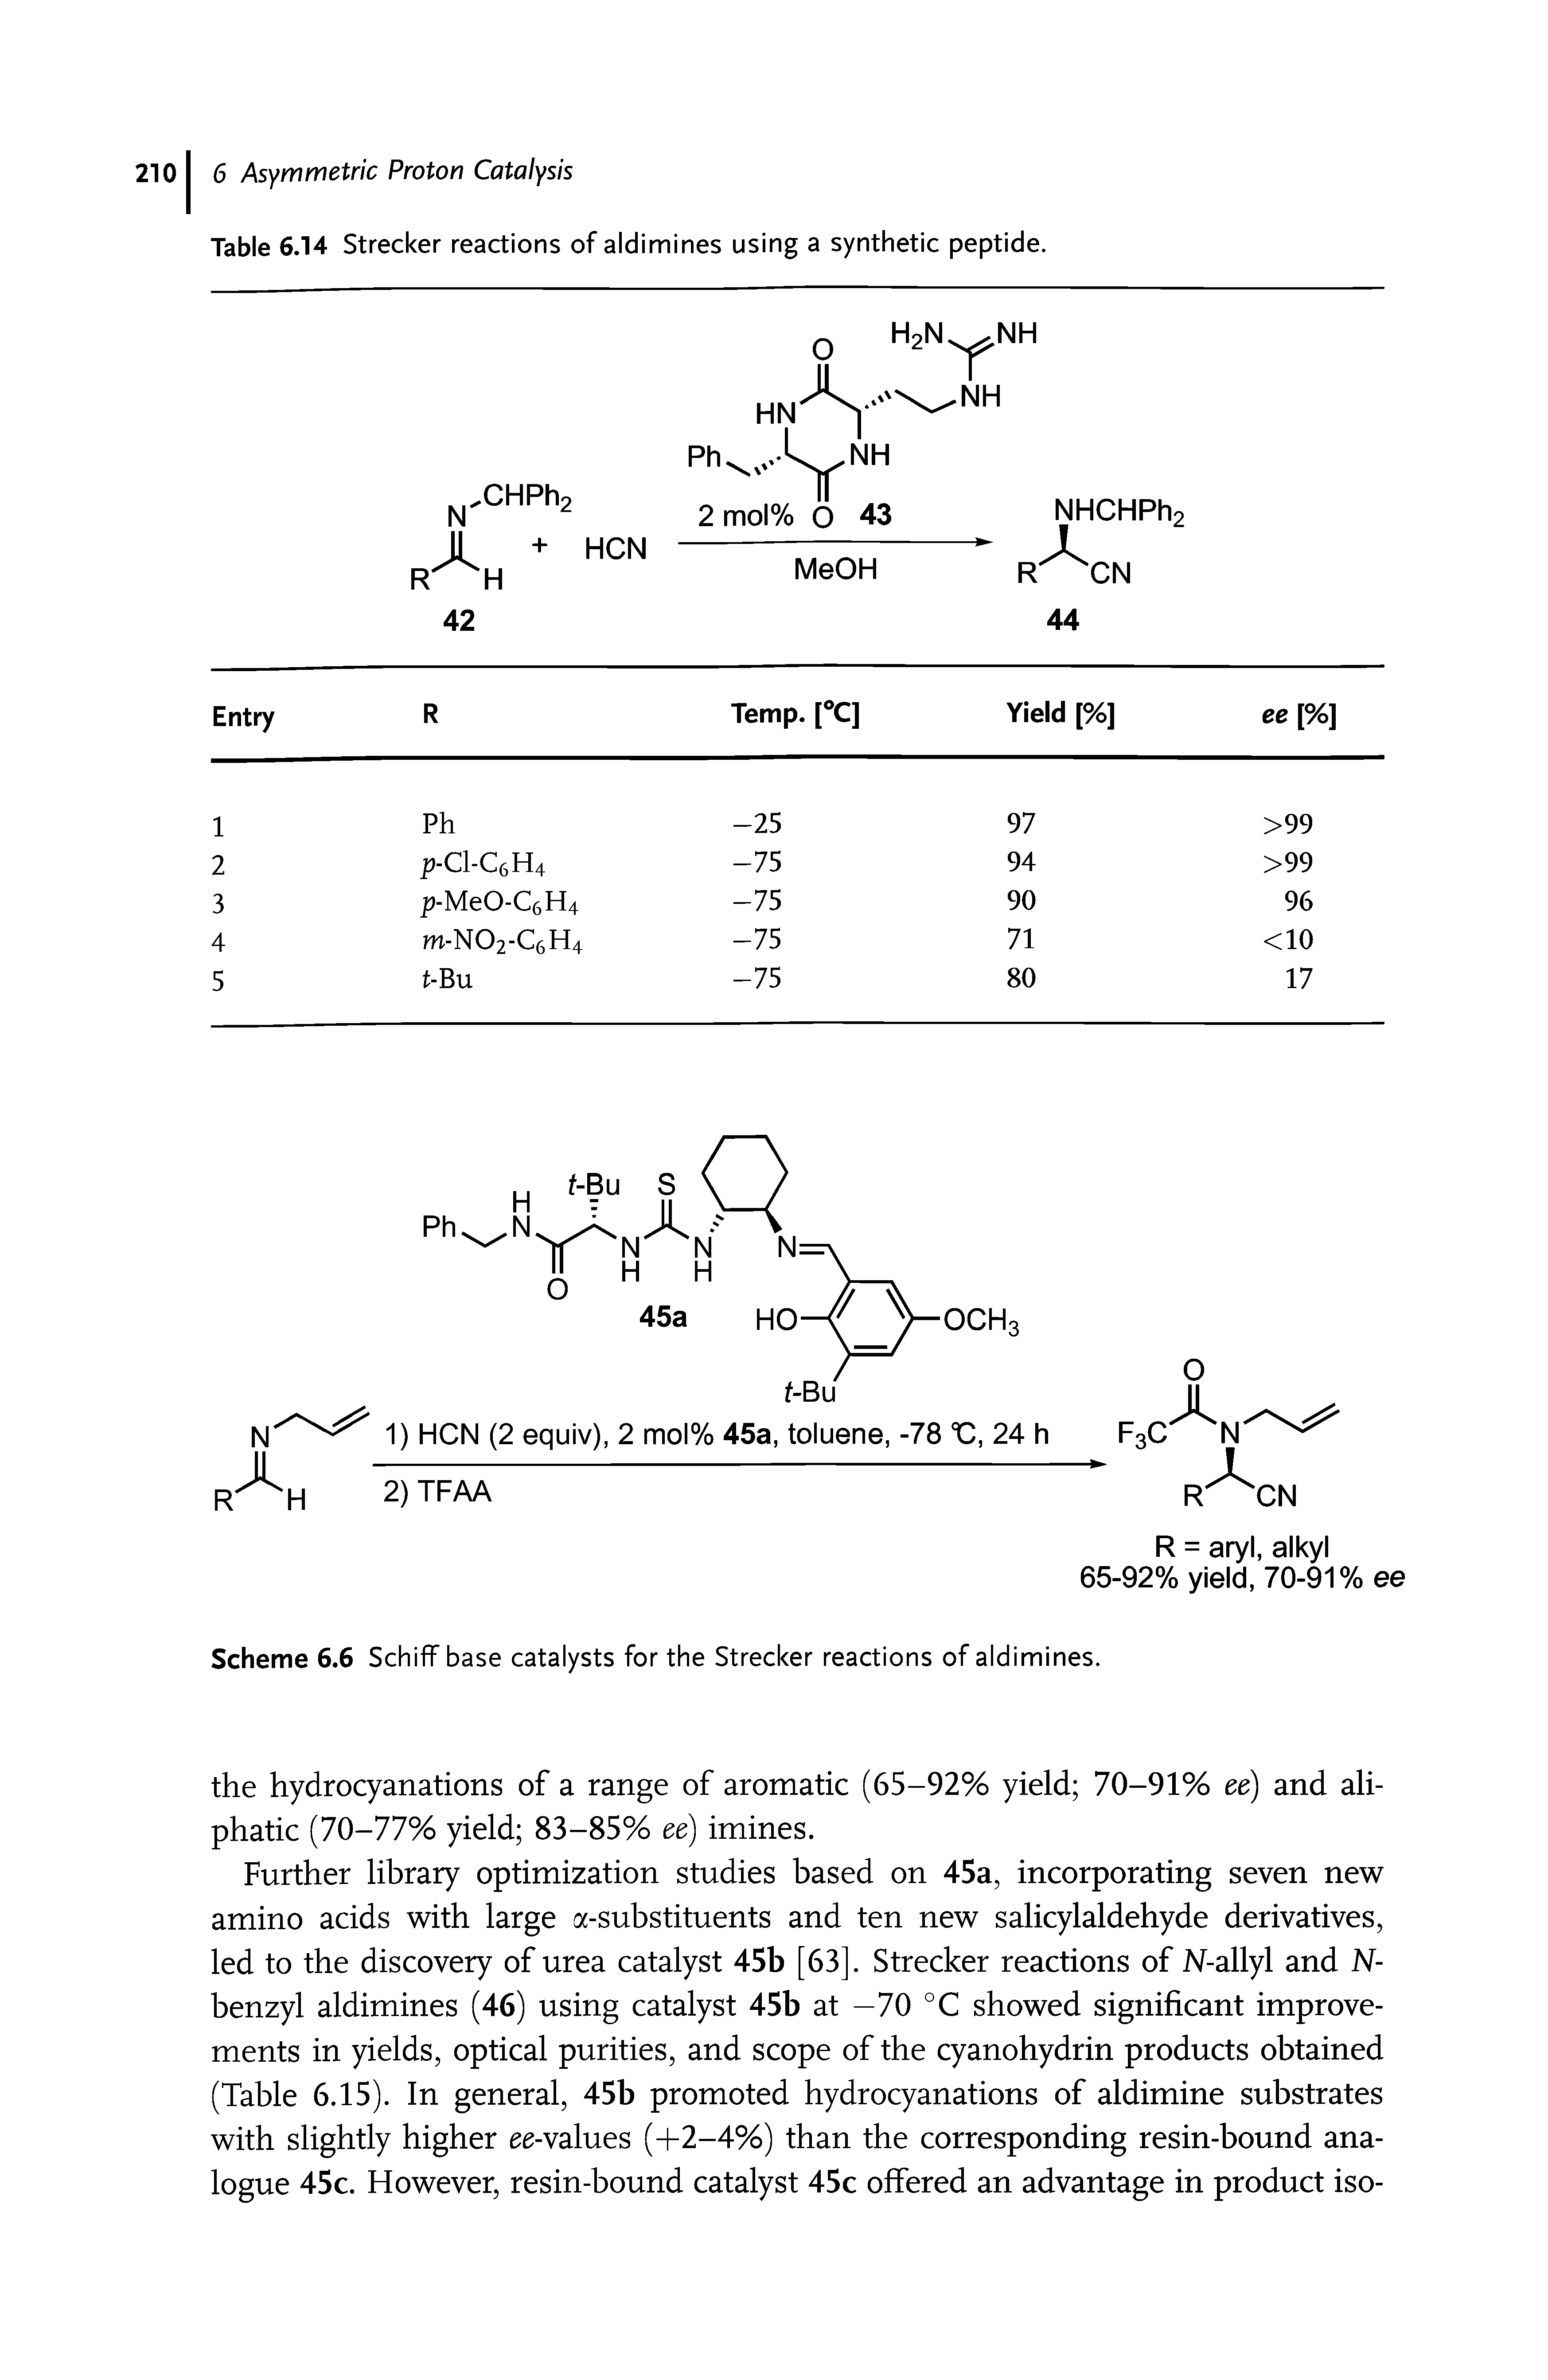 Scheme 6.6 Schiff base catalysts for the Strecker reactions of aldimines.